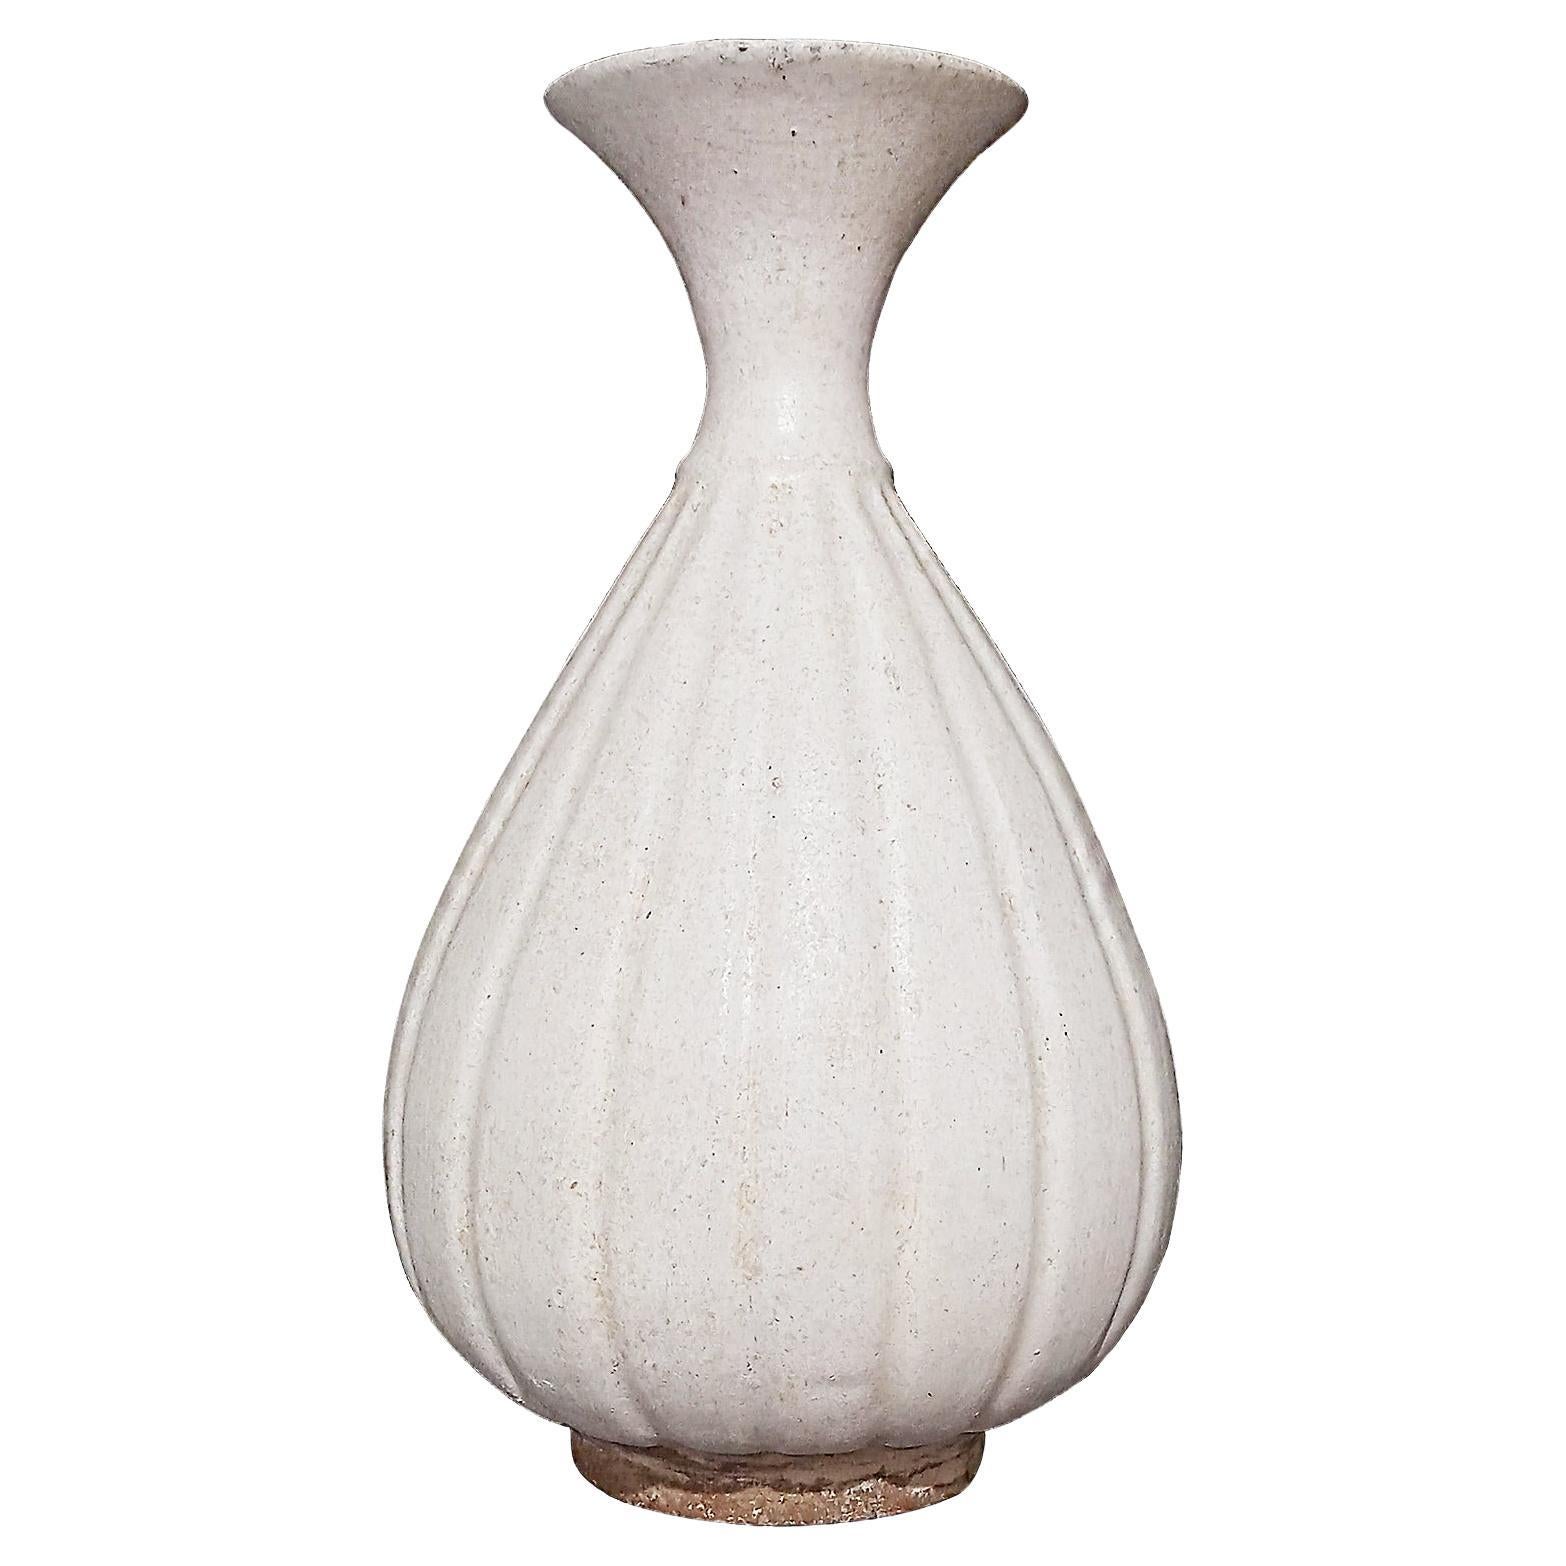 Thai Ceramic Vase with White Glaze